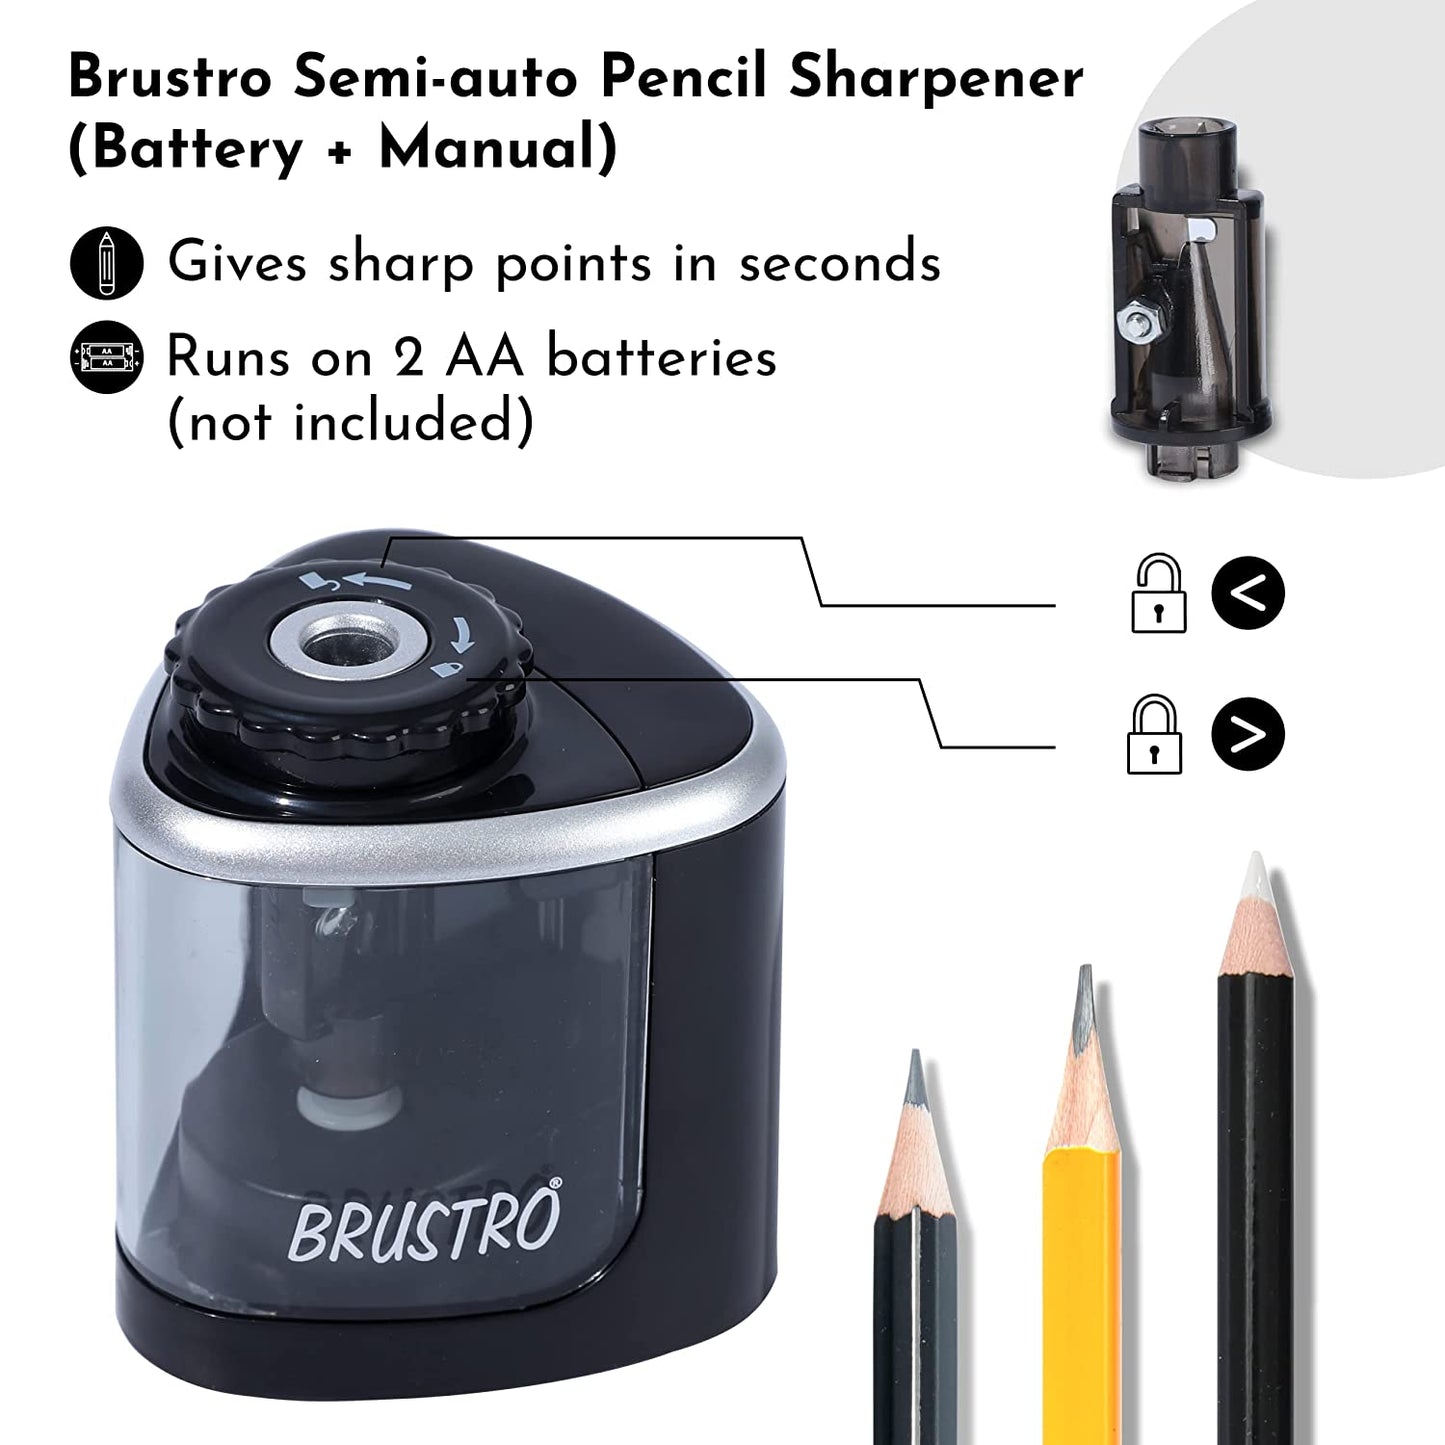 Brustro Semi-Auto (Battery Operated + Manual) Pencil Sharpener